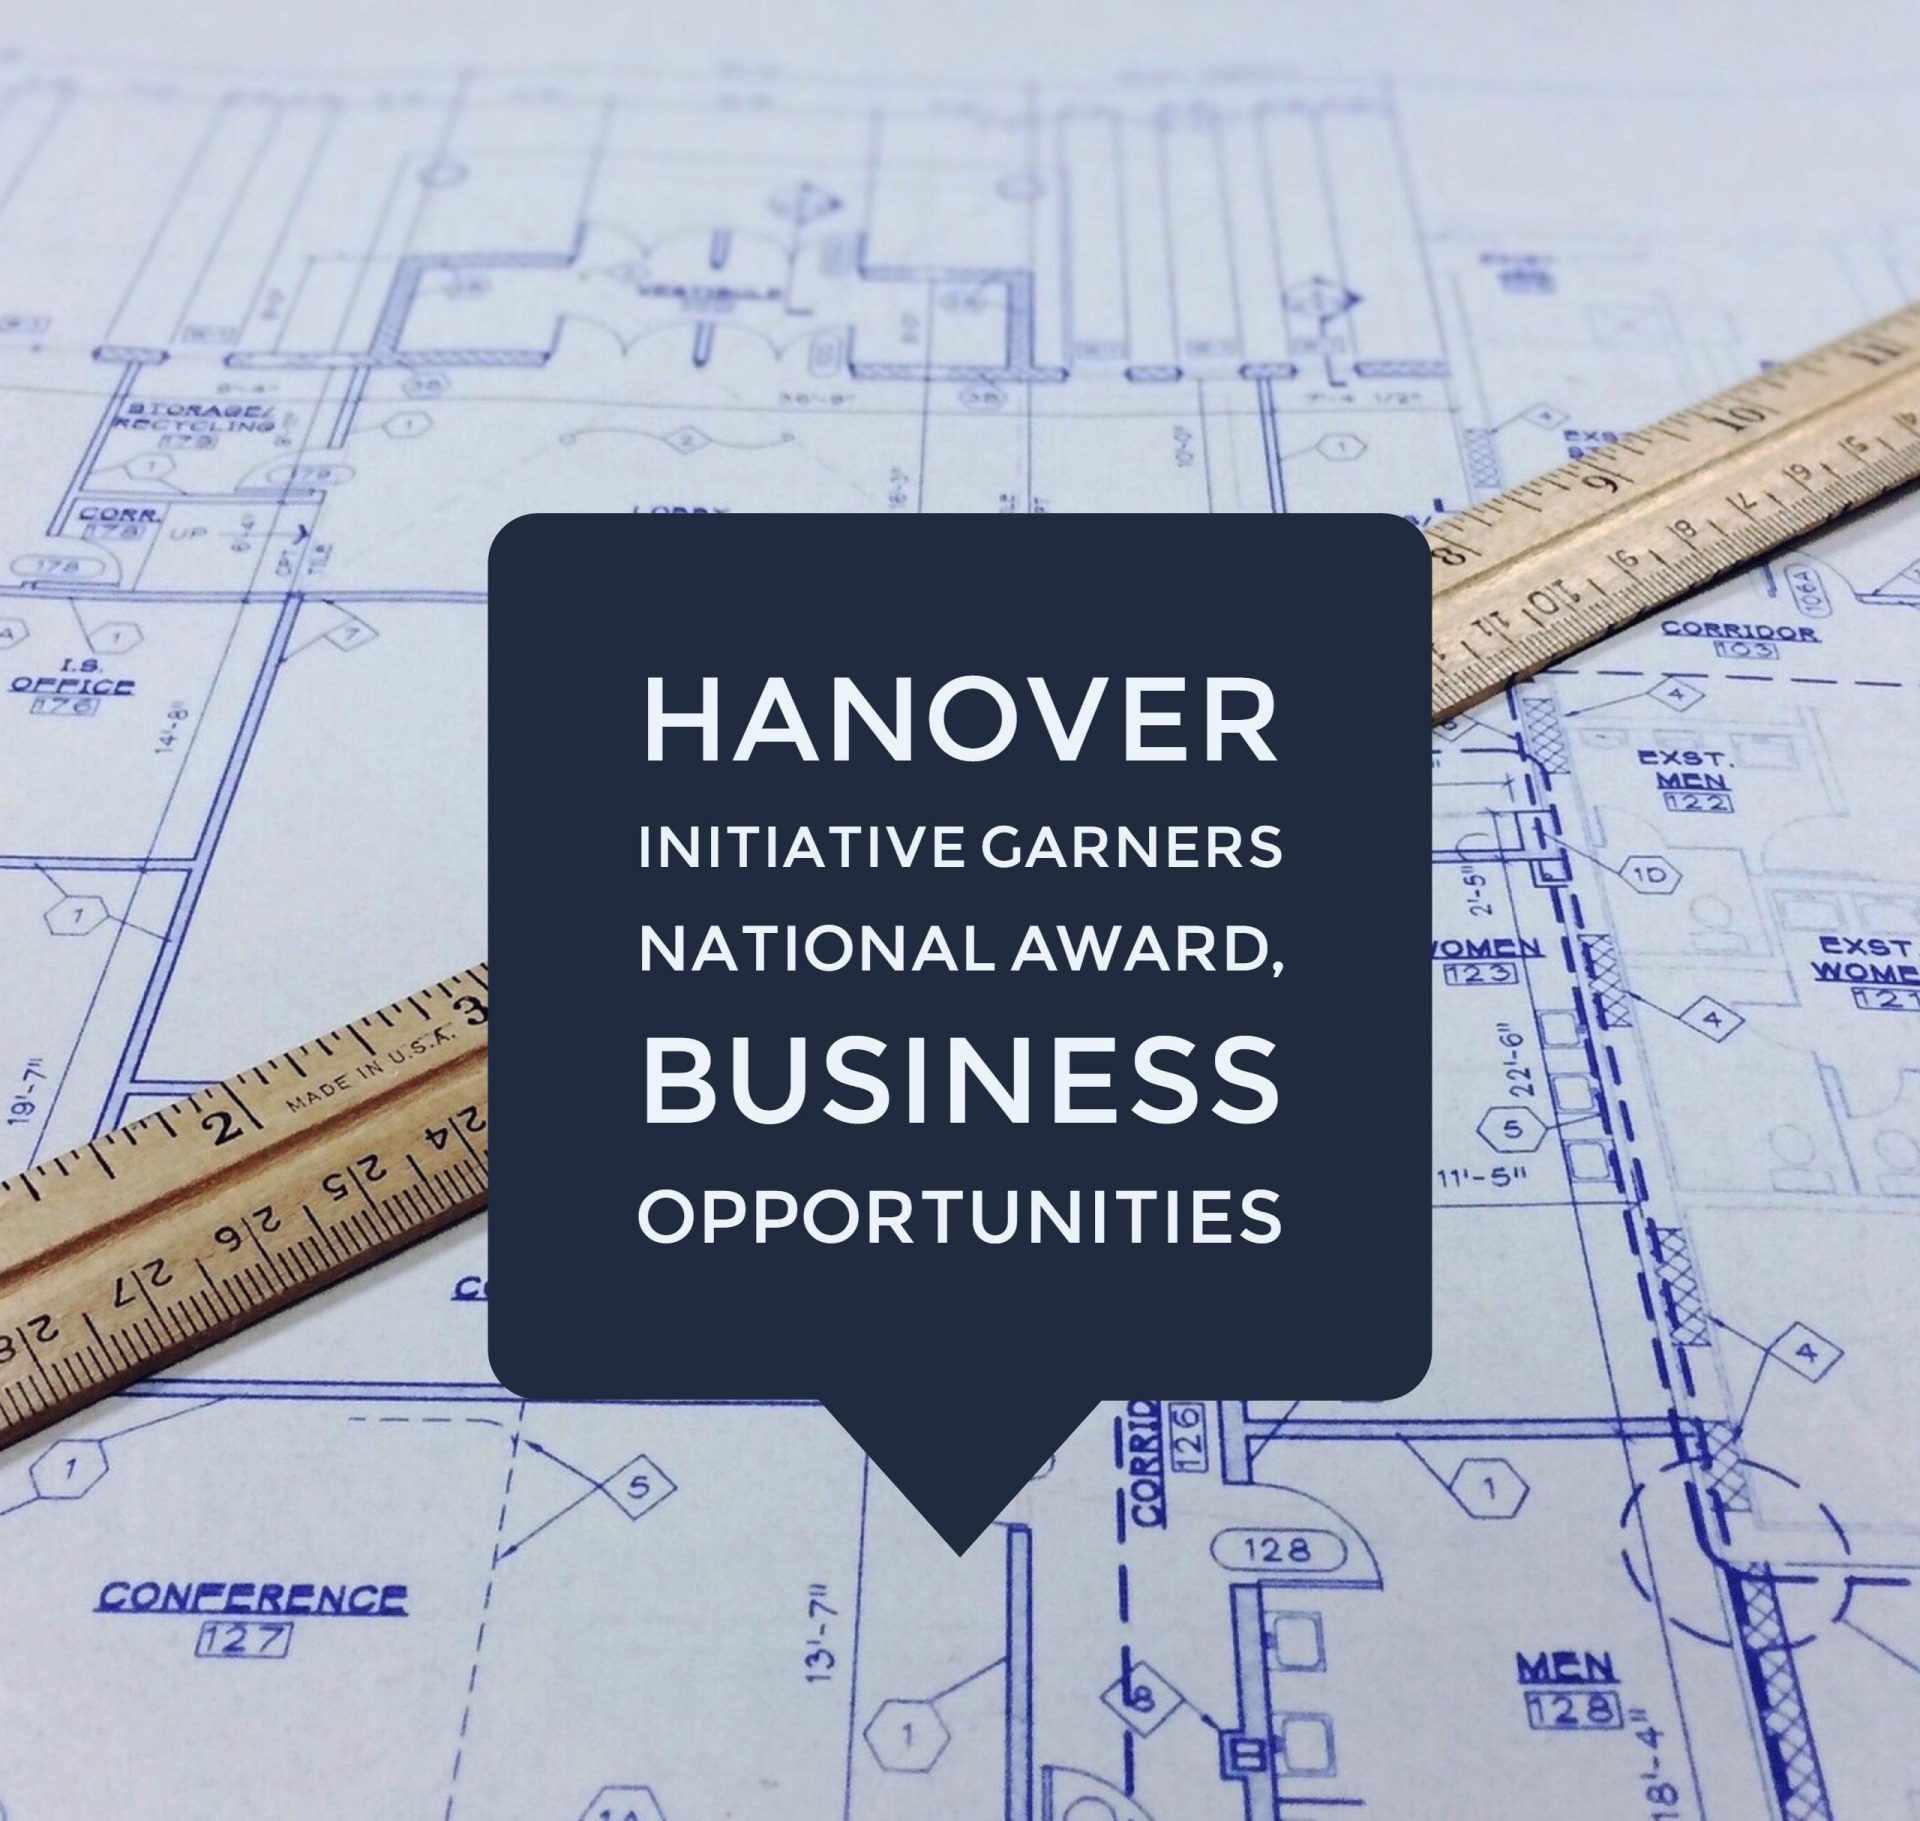 Hanover initiative garners national award, business opportunities